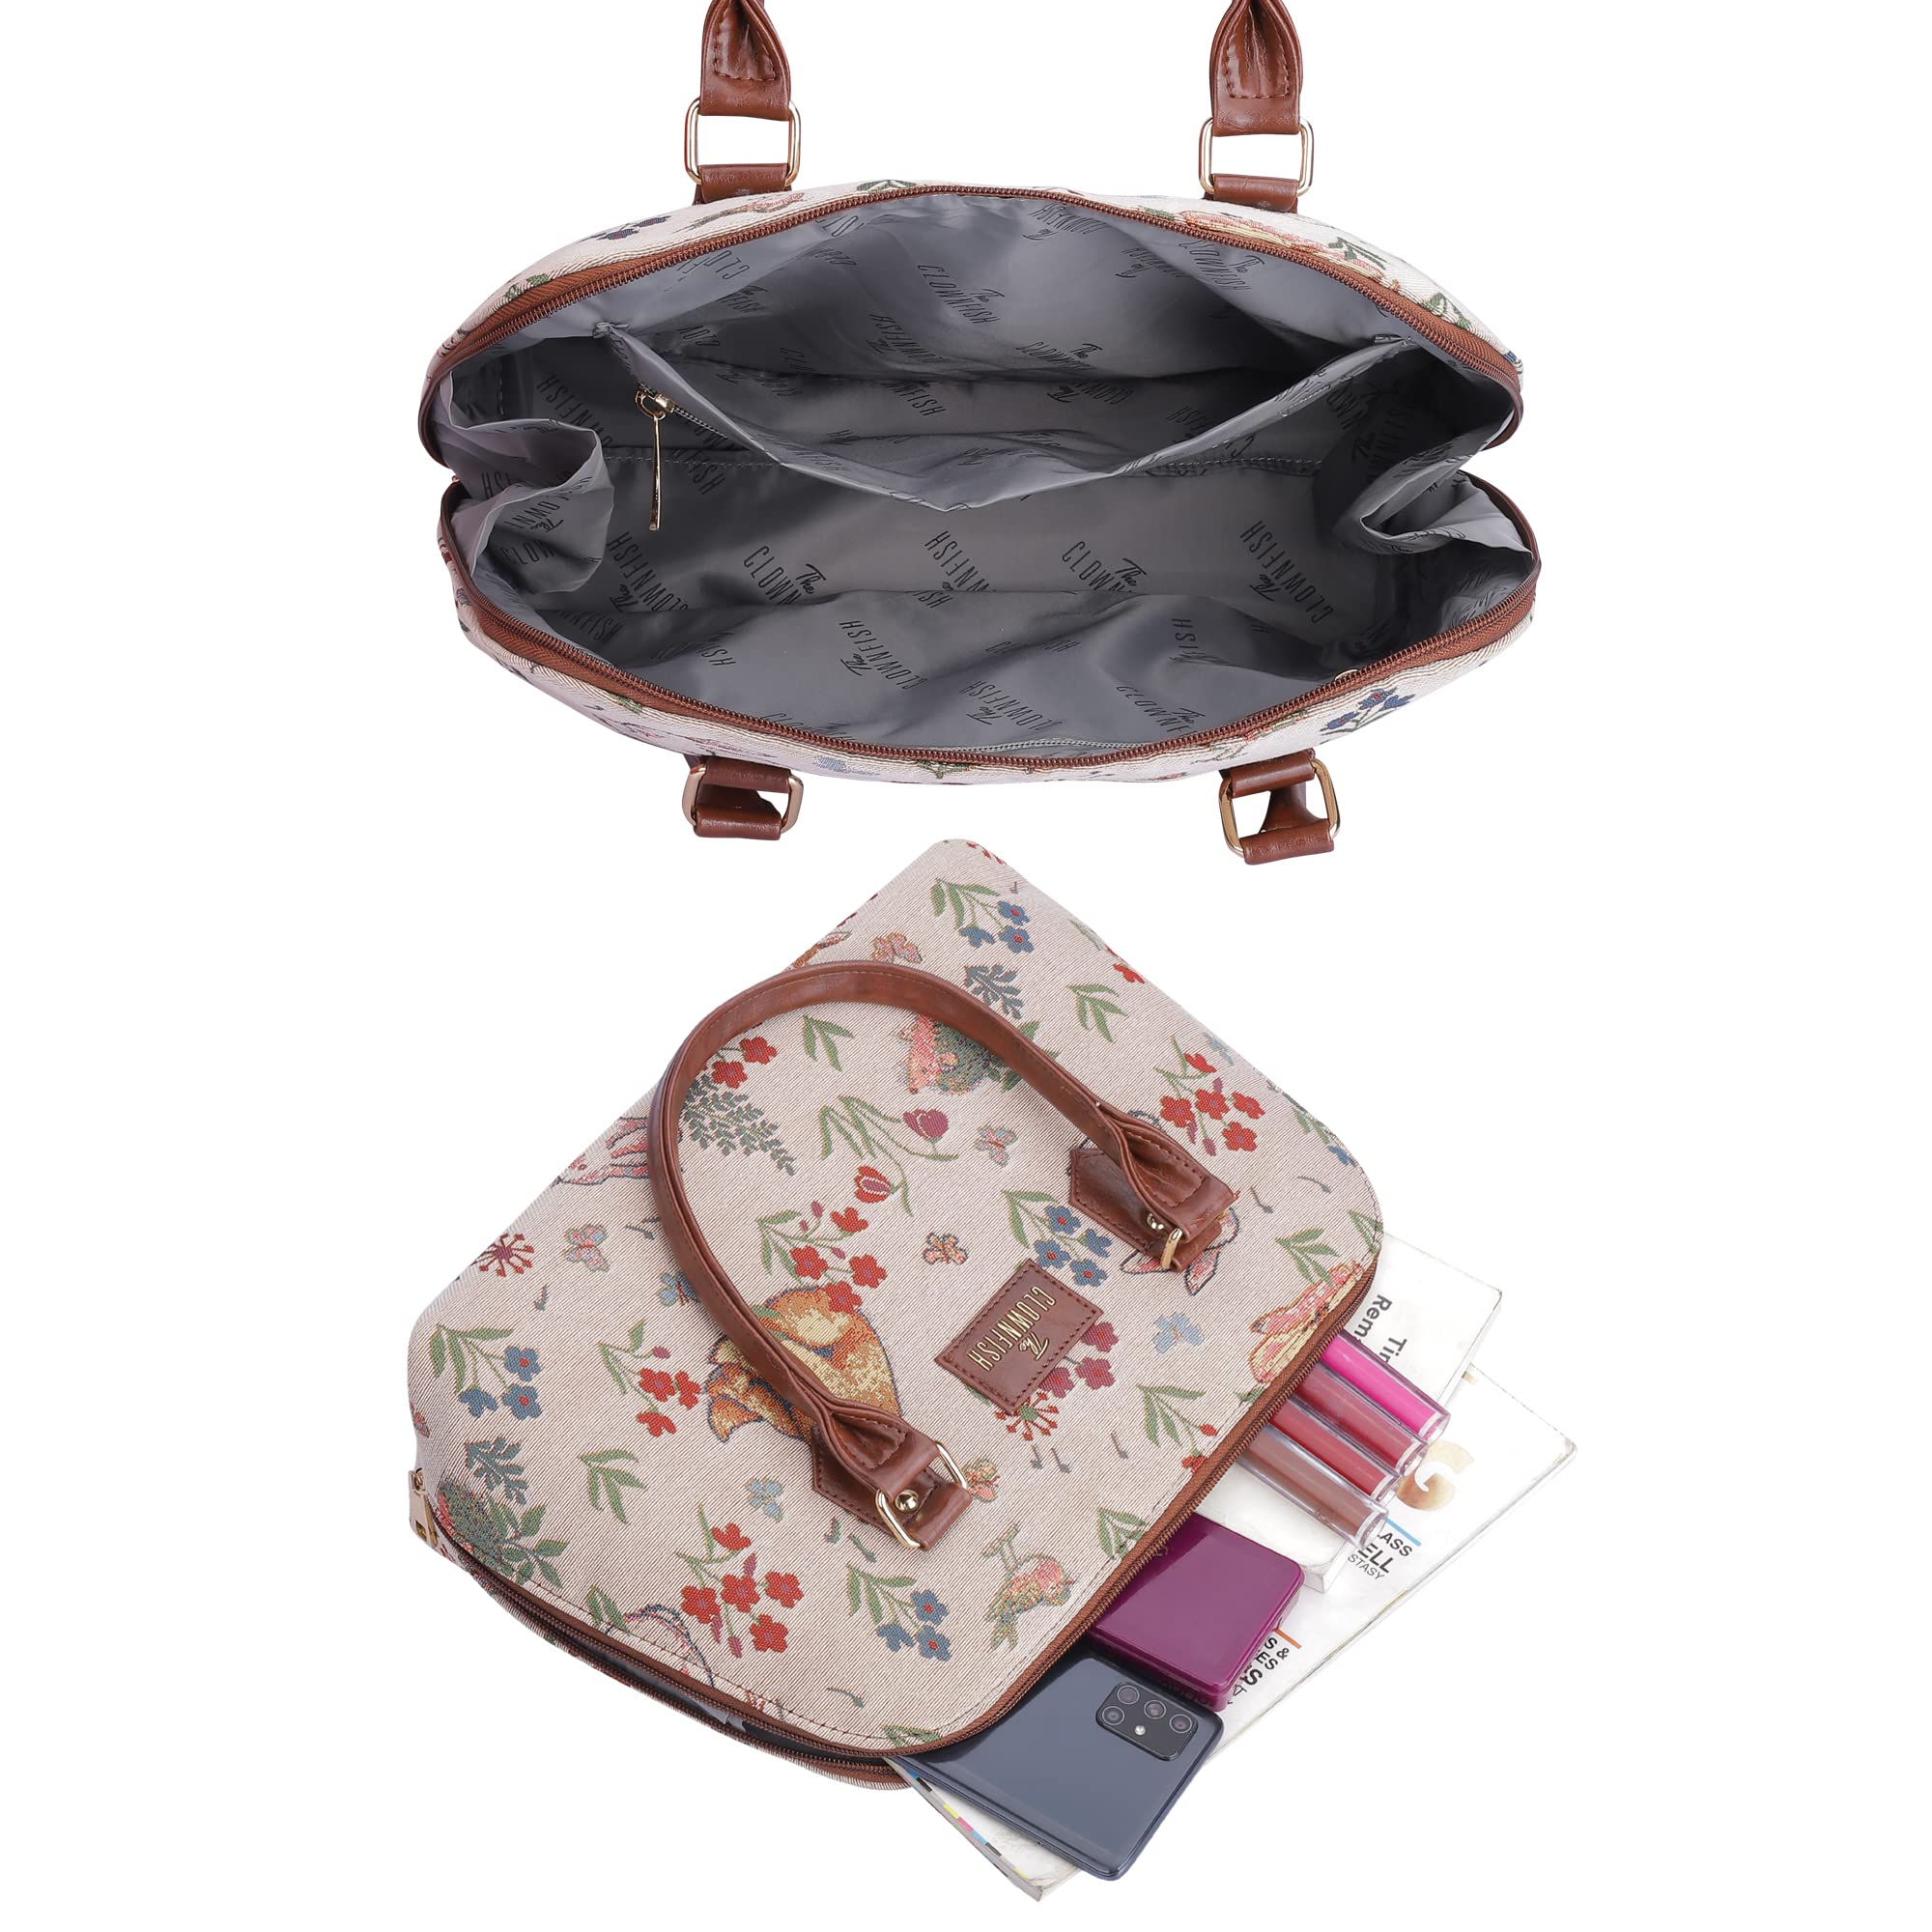 Amazon.com: Laptop Tote Bag for Women Work 15.6 inch Canvas Shoulder Bags  Computer Messenger Purse Teacher Handbag Office Briefcase : Electronics